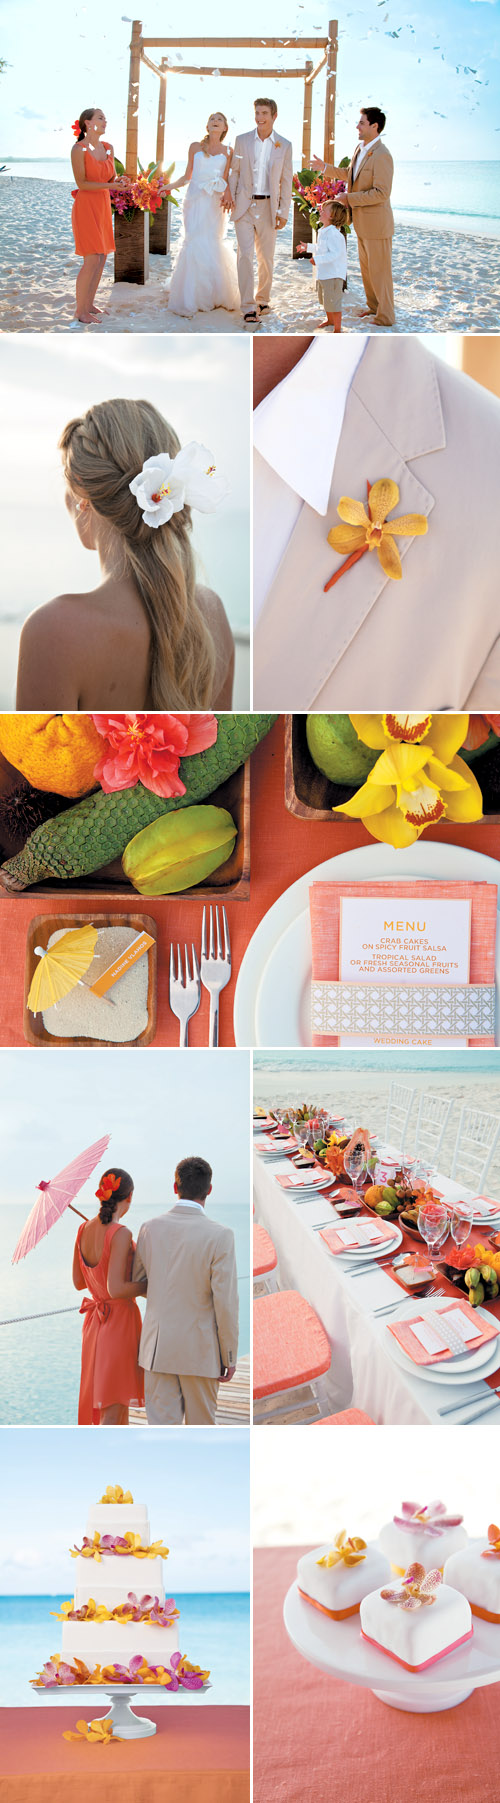 Island Paradise destination wedding theme - Beaches Resort Turks and Caicos with destination wedding packages from Martha Stewart Weddings